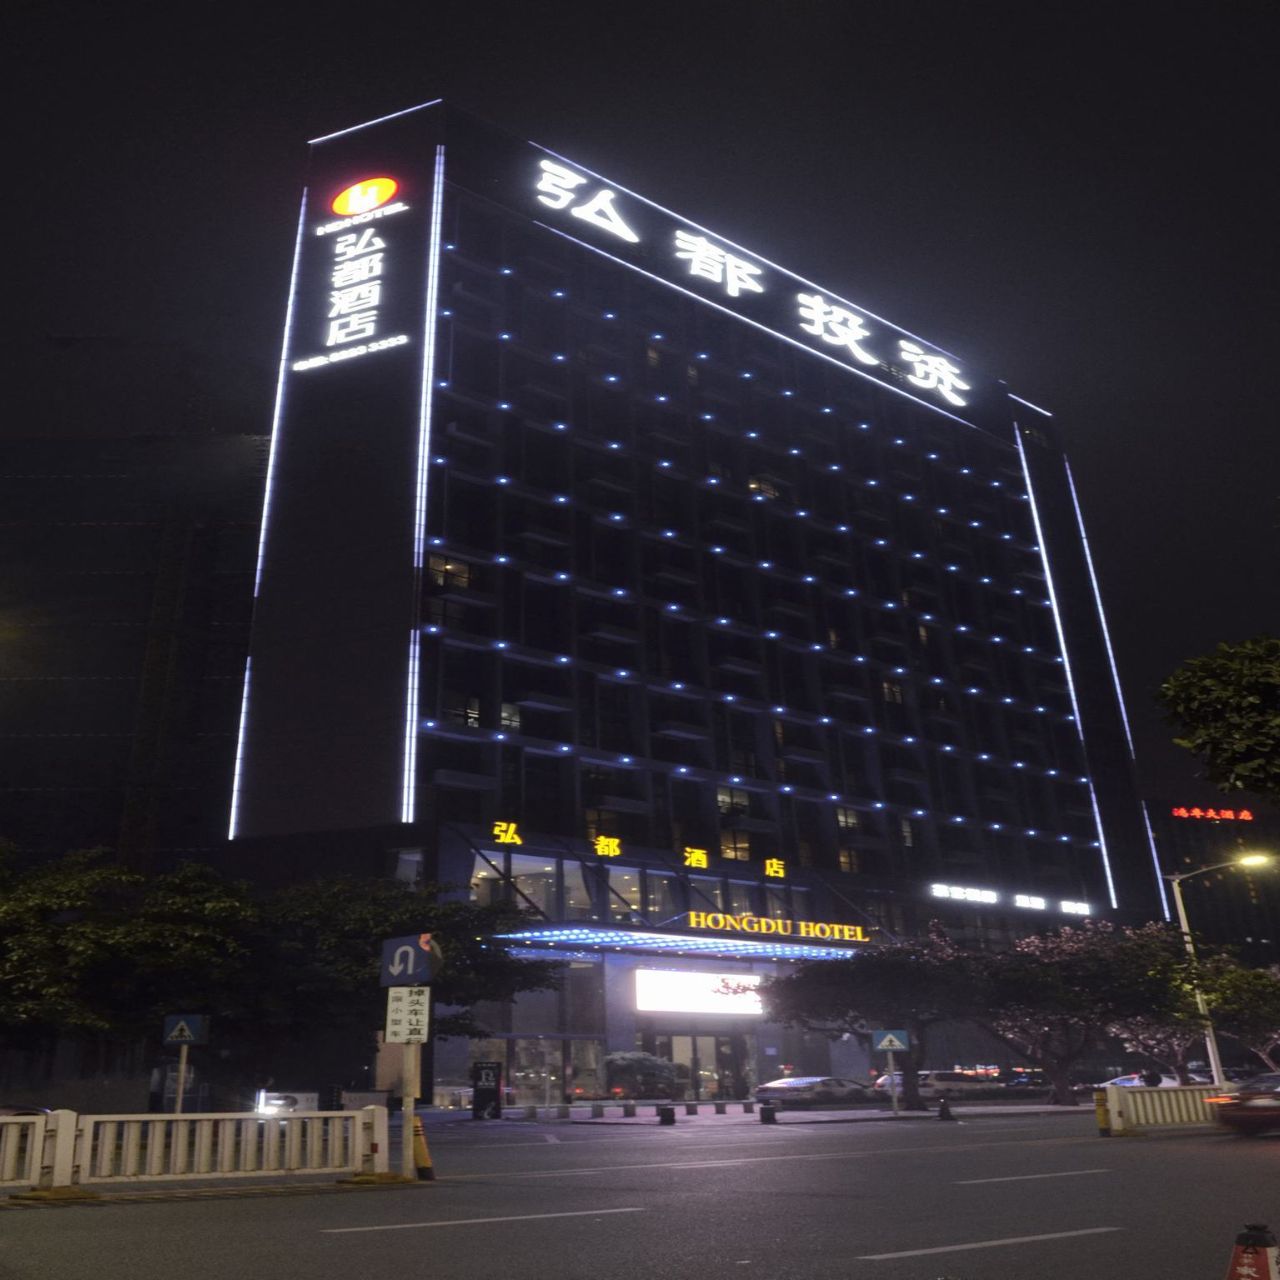 Shenzhen Hongdu Hotel - Shenzhen - Great prices at HOTEL INFO